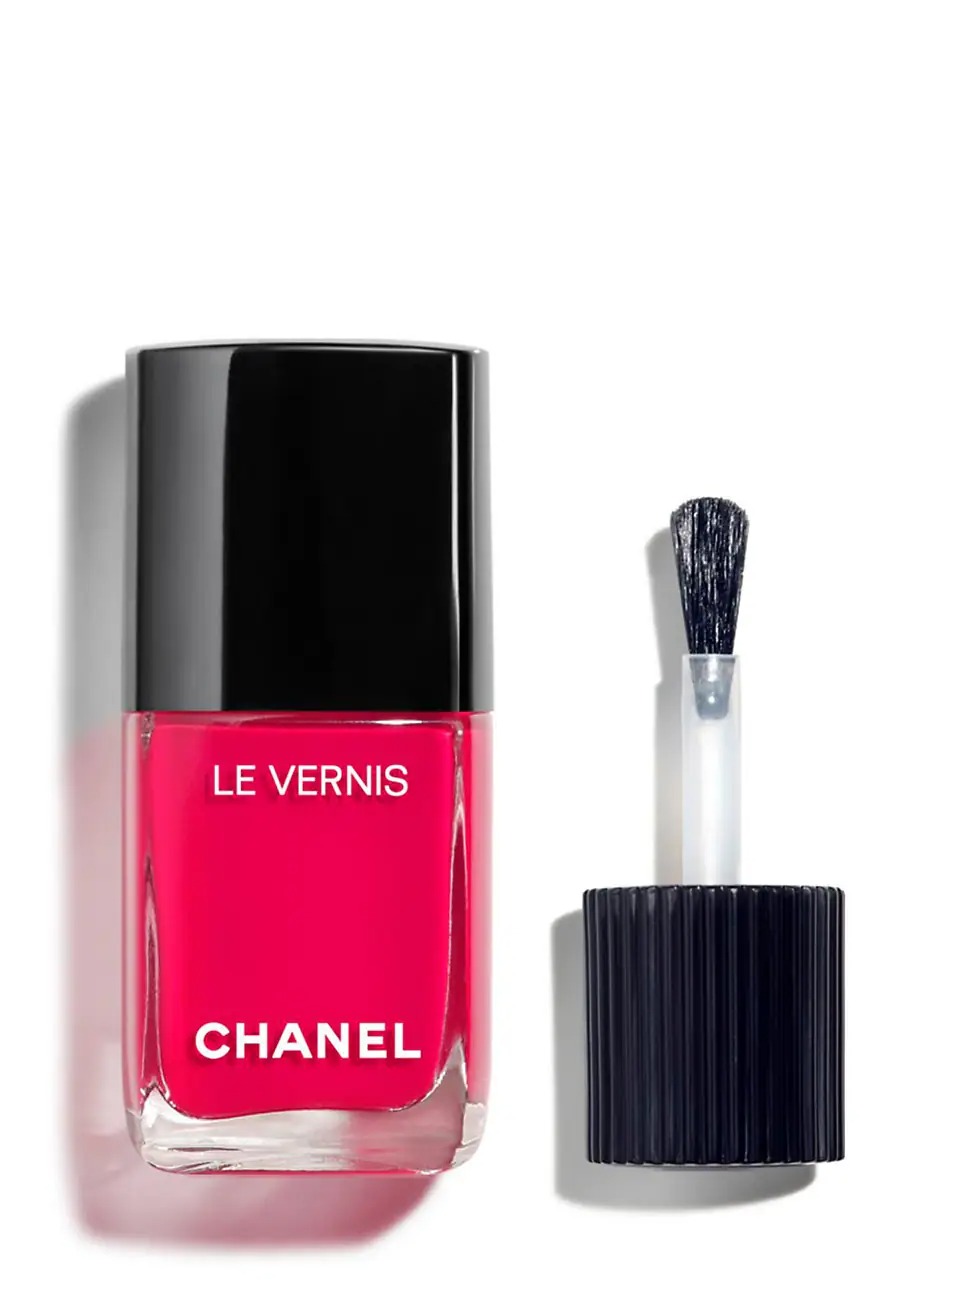 Chanel Le Vernis in Diva